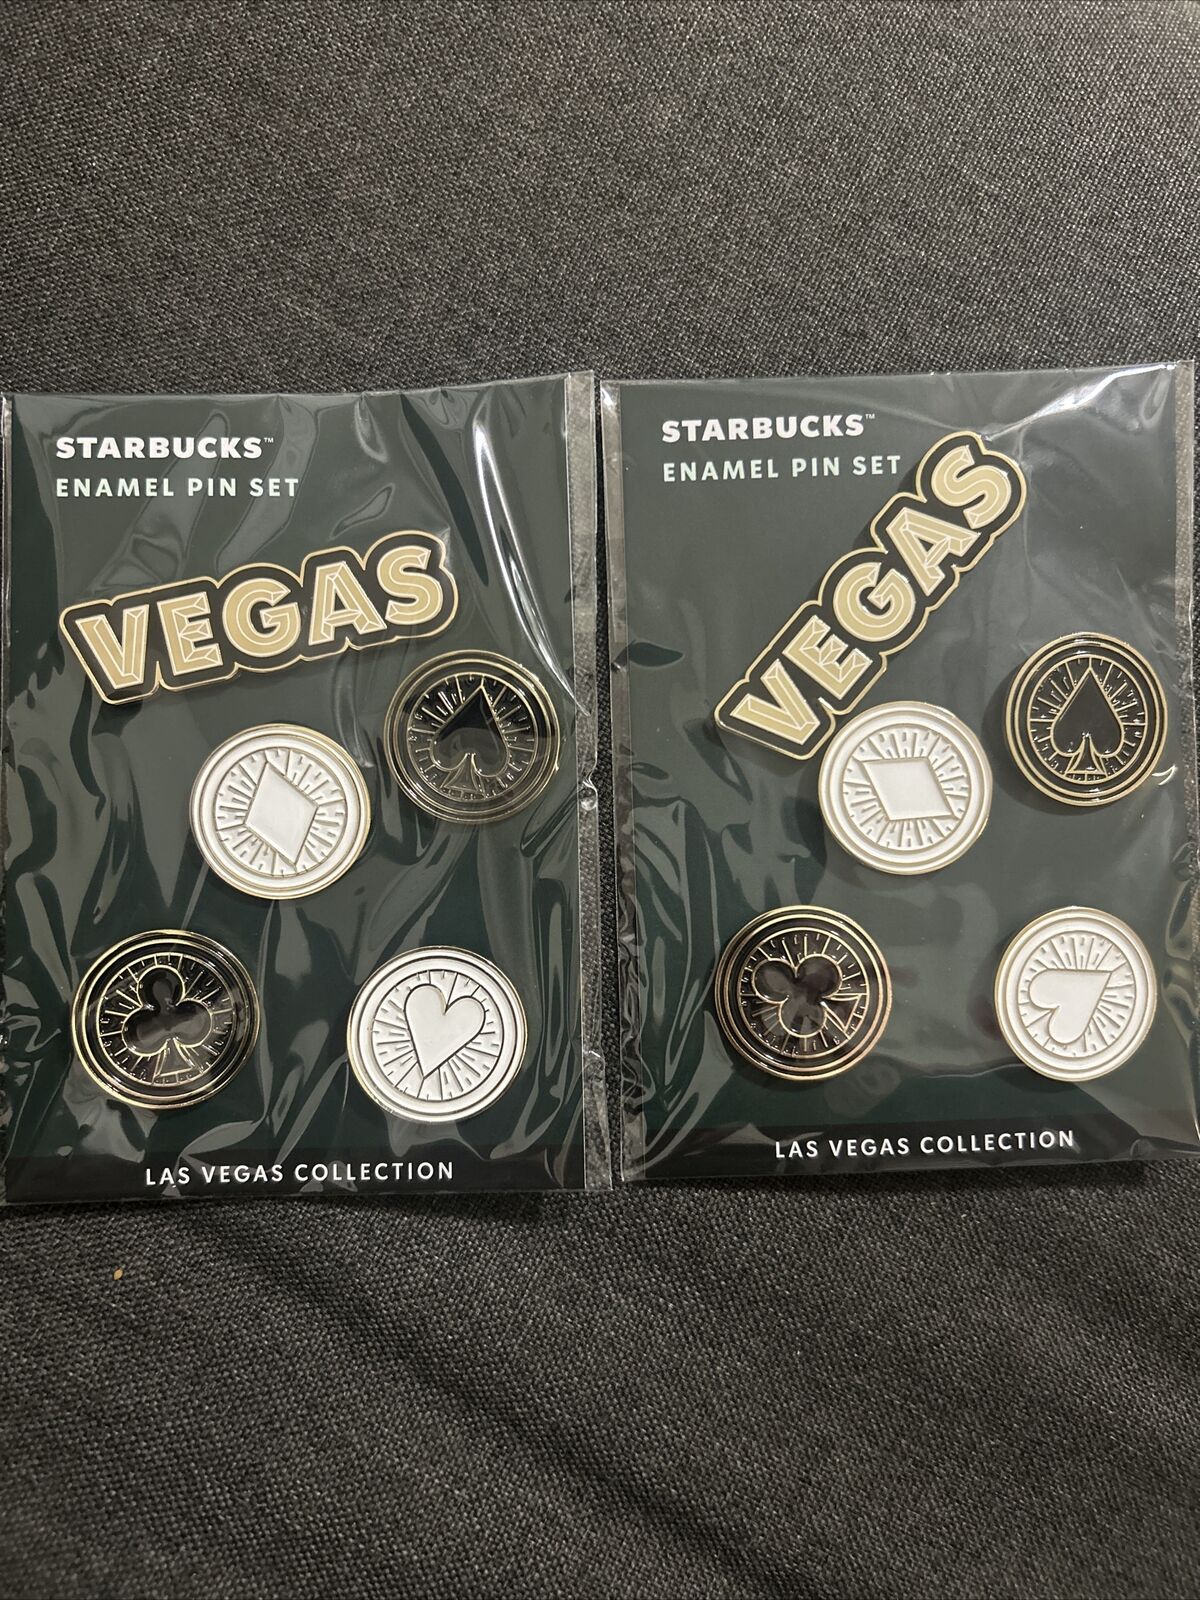 (Lot of 2) Starbucks Enamel Pin Set - Las Vegas Collection, 5 Pins each, New